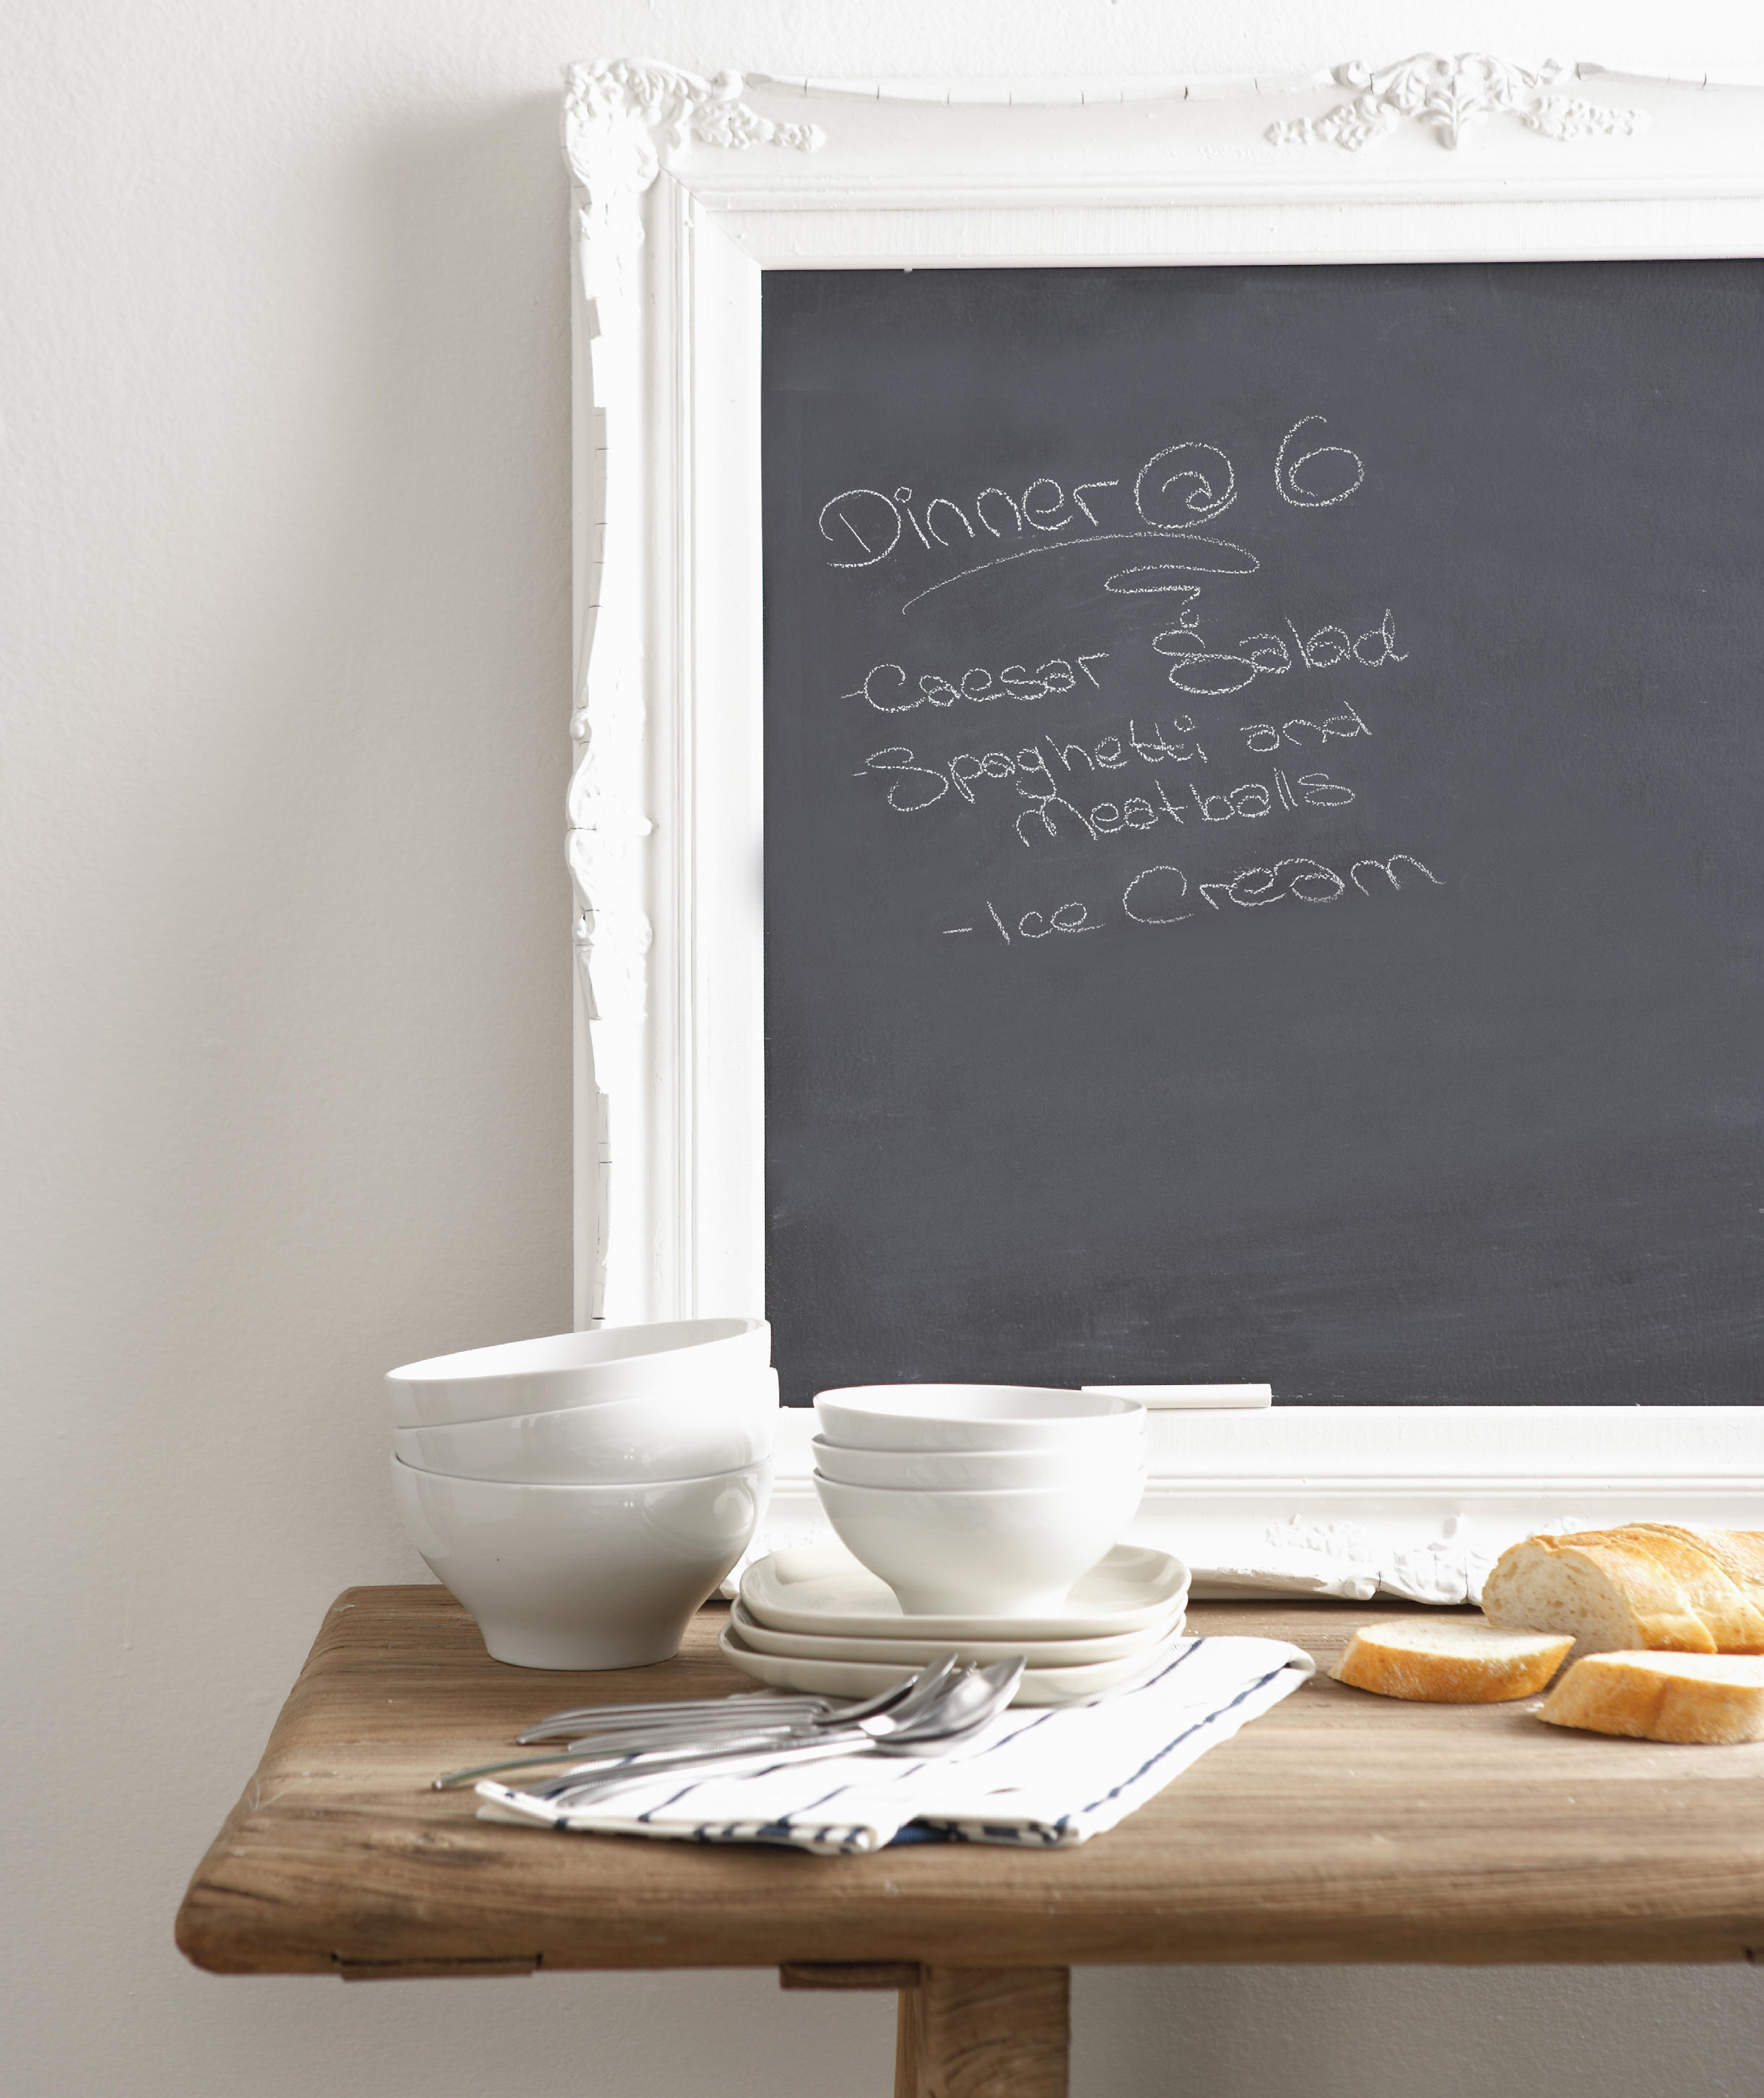 Create a vintage chalkboard in 3 easy steps